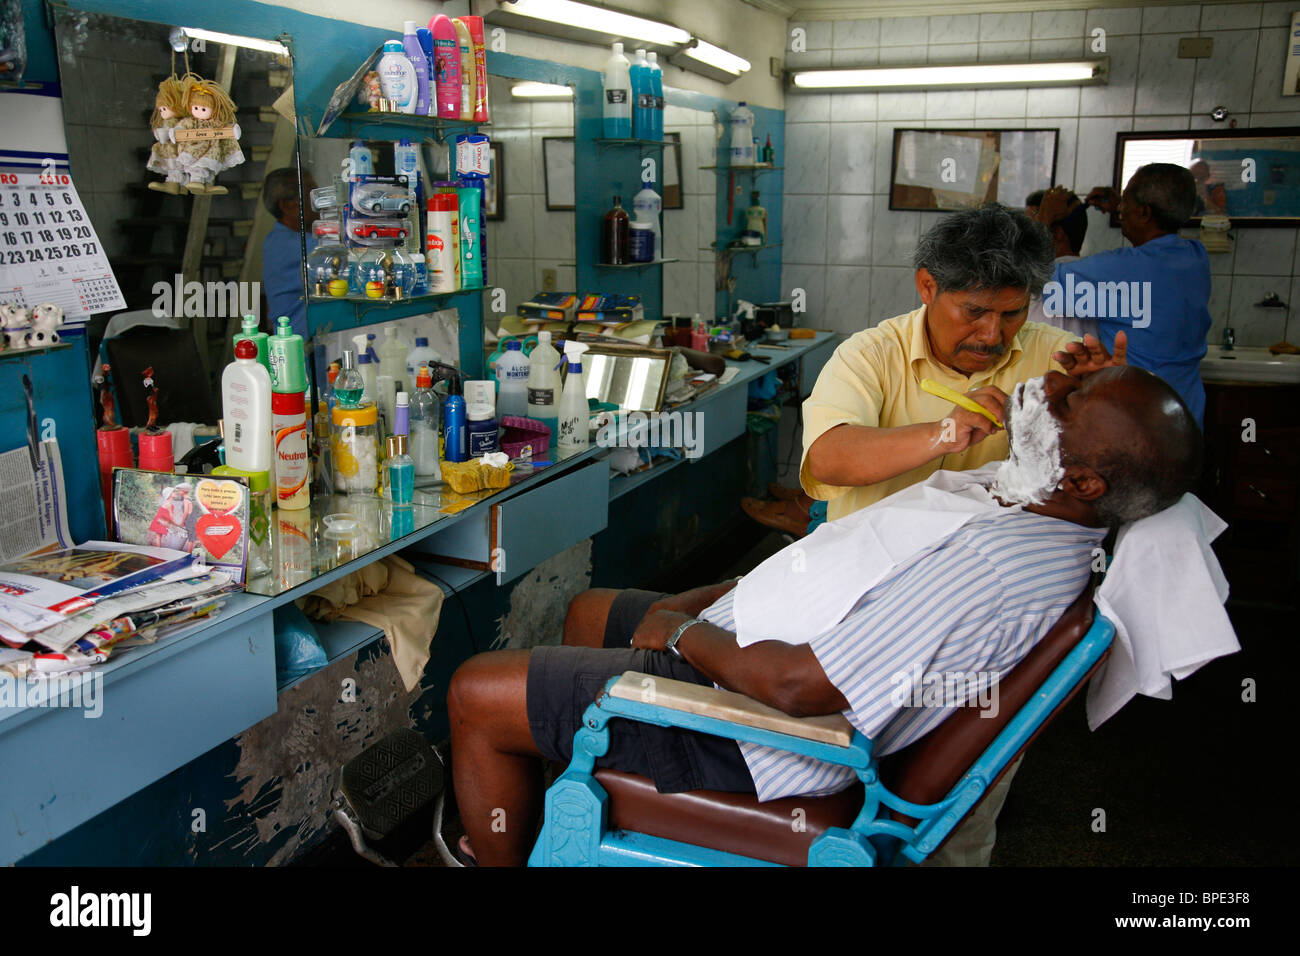 Brazilian Barber Shop